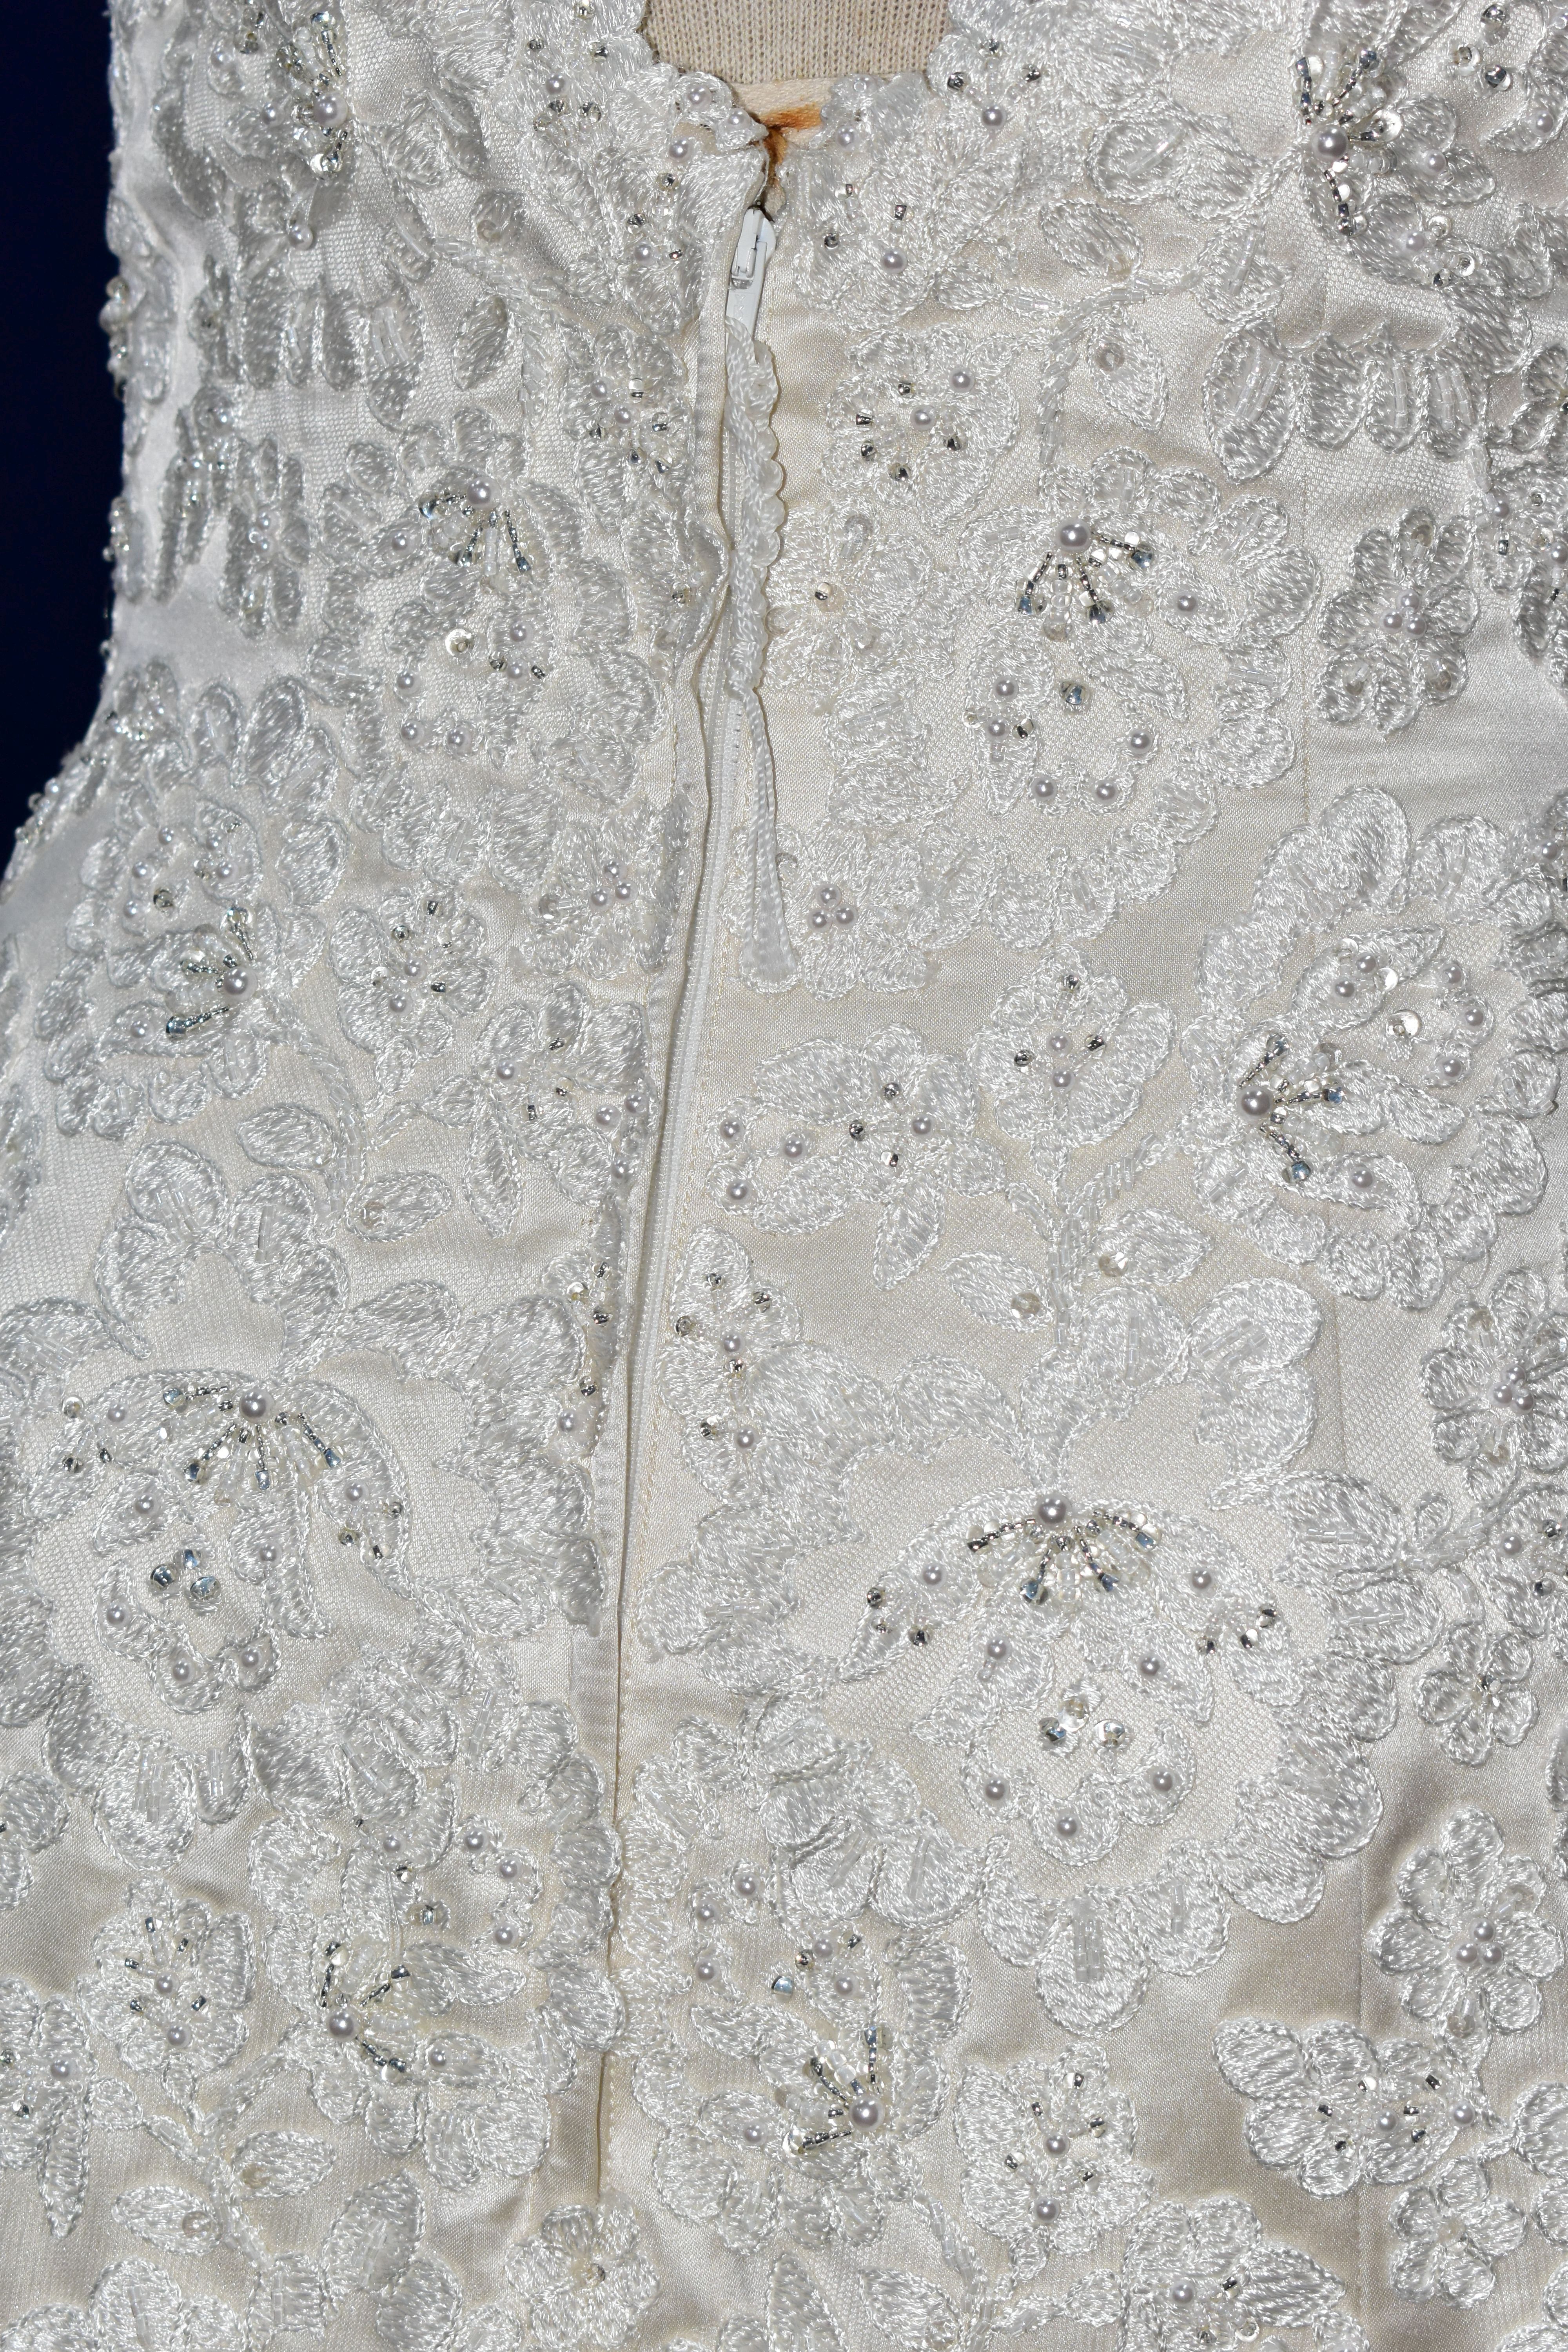 WEDDING DRESS, 'David Tutera' champagne, size 6, satin, strapless, beaded appliques (1) - Image 10 of 10